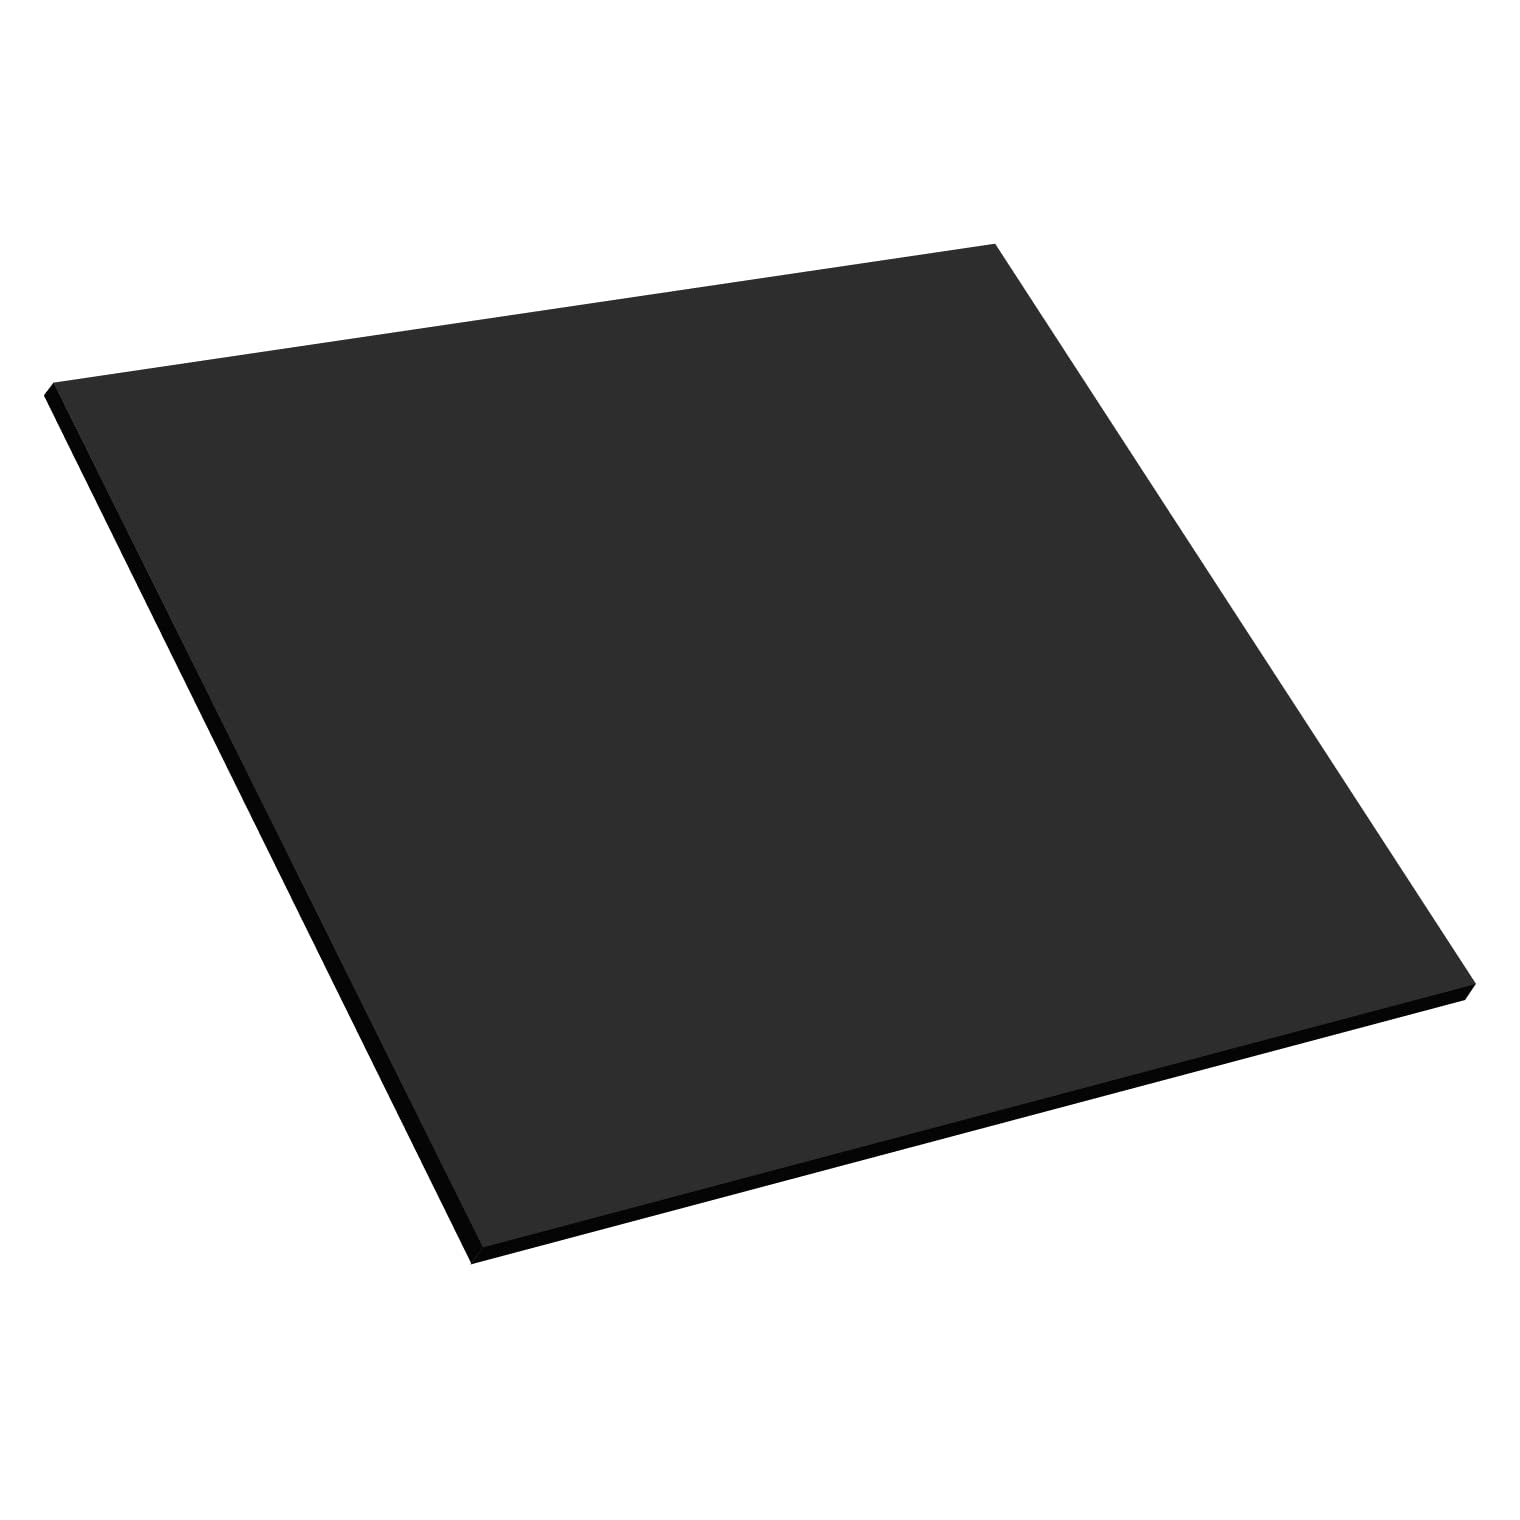 M7-GFVS-ULJ0 Mega Format Expanded Pvc Plastic Sheets - 12 X 12 Rigid Black  Sheet For Crafts, Signage, & Displays - Sintra, Celtec Pvc Board 